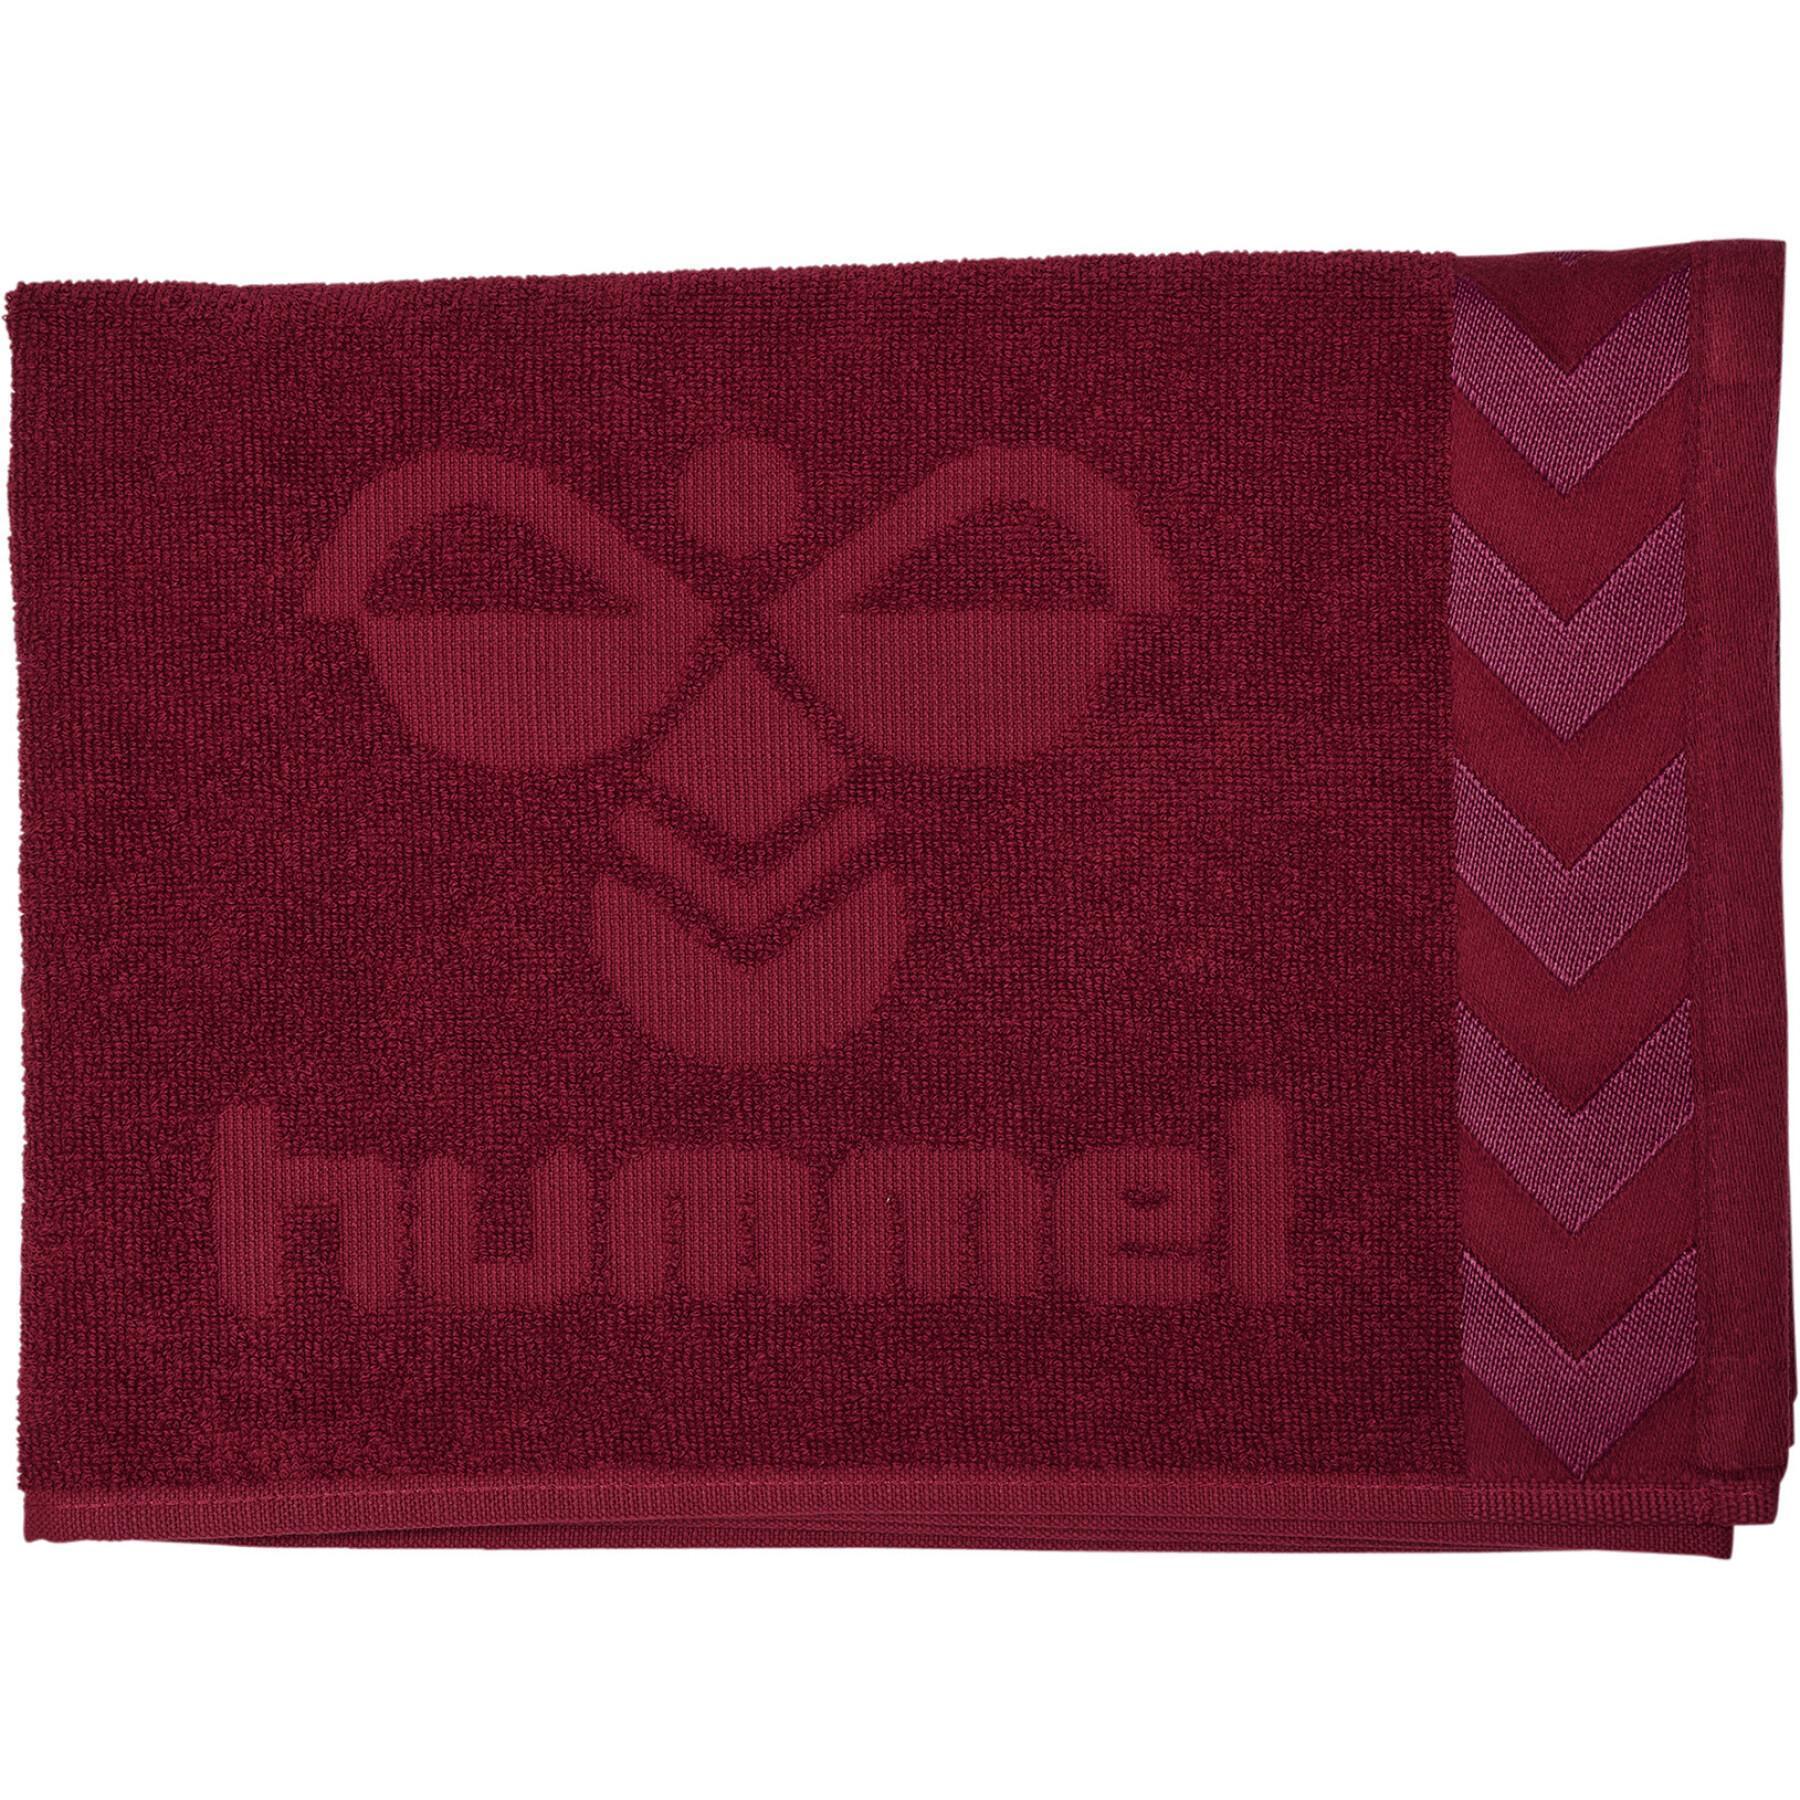 Toalha Hummel Towel